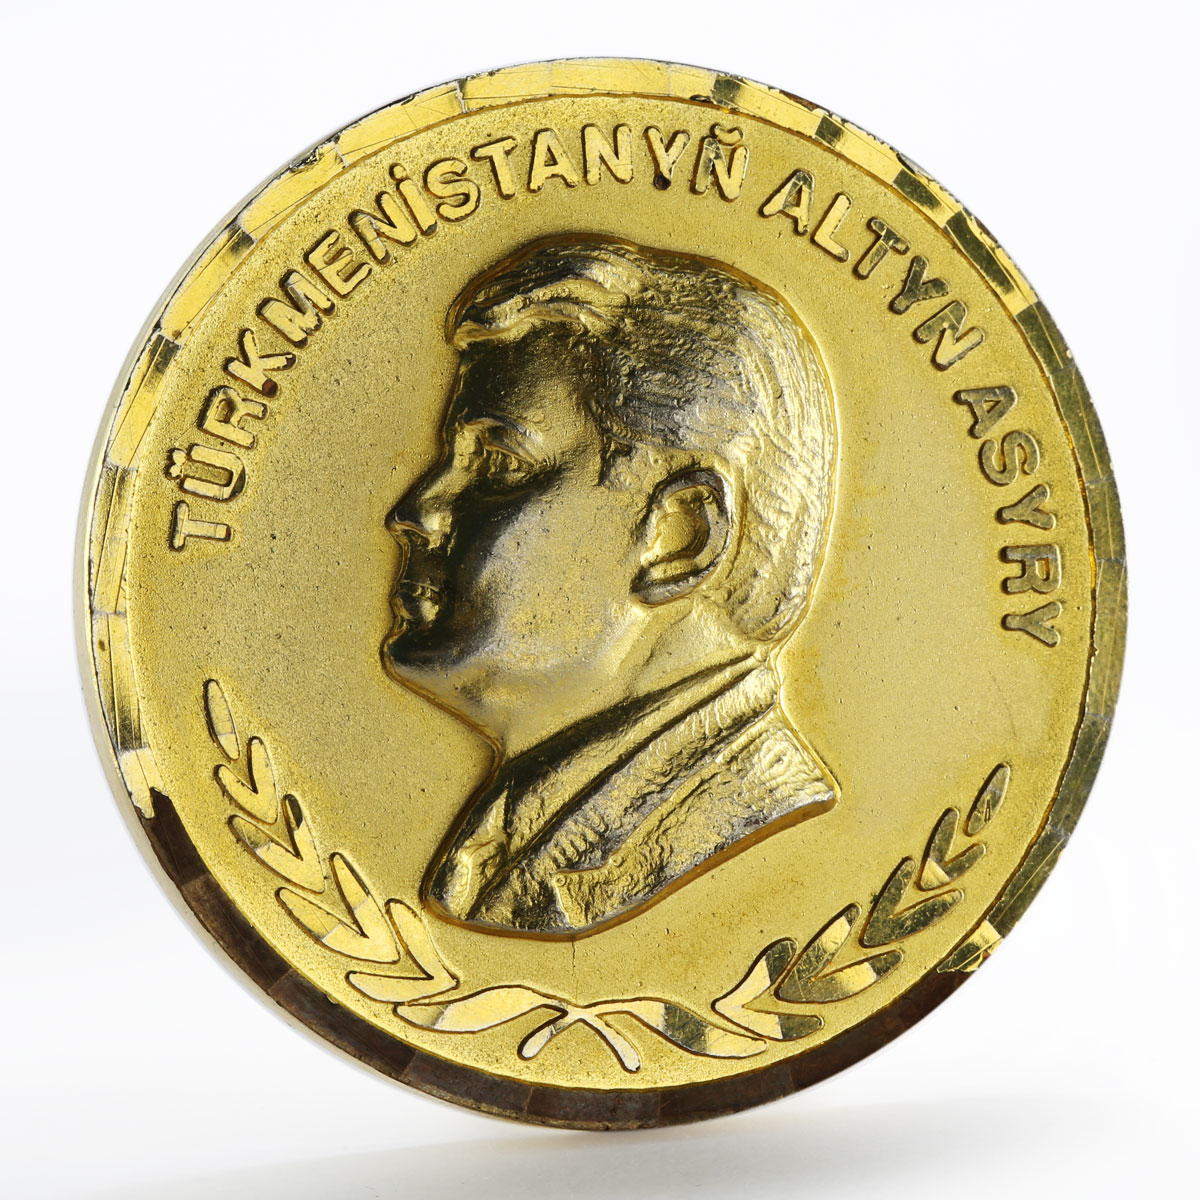 Turkmenistan President Saparmurat Niyazov medal